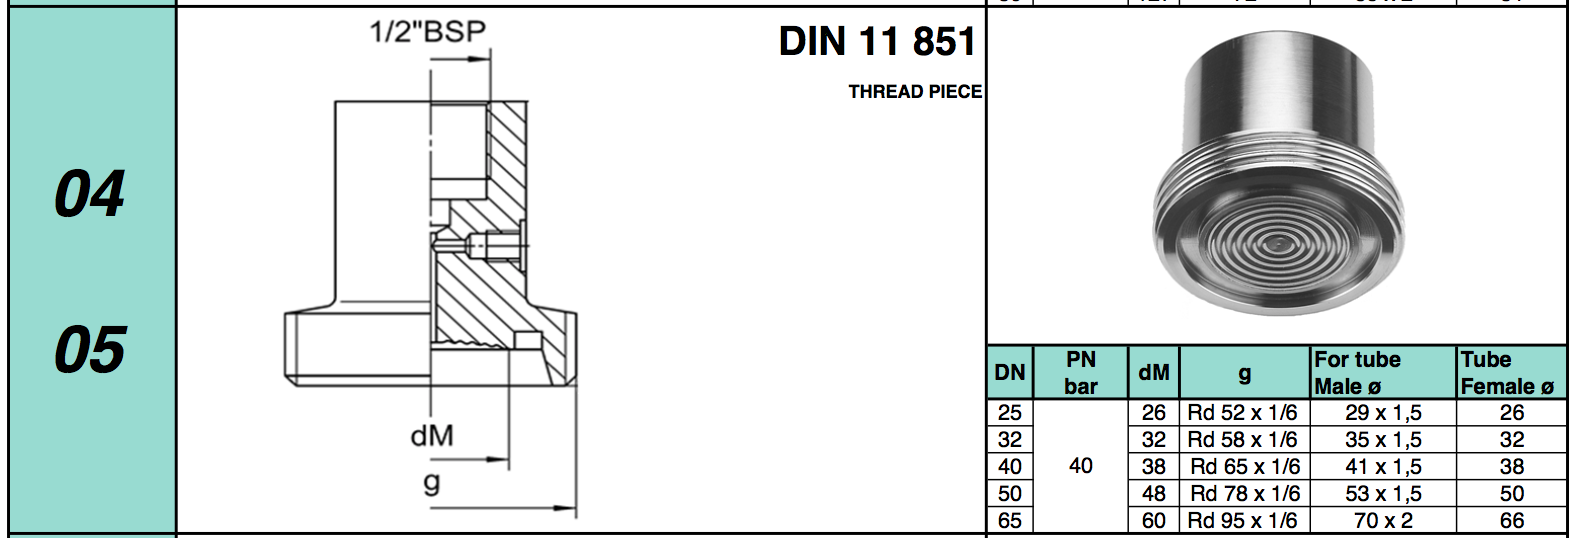 Chuẩn kết nối Diaphragm Seal dạng Thread Piece DIN 11 851